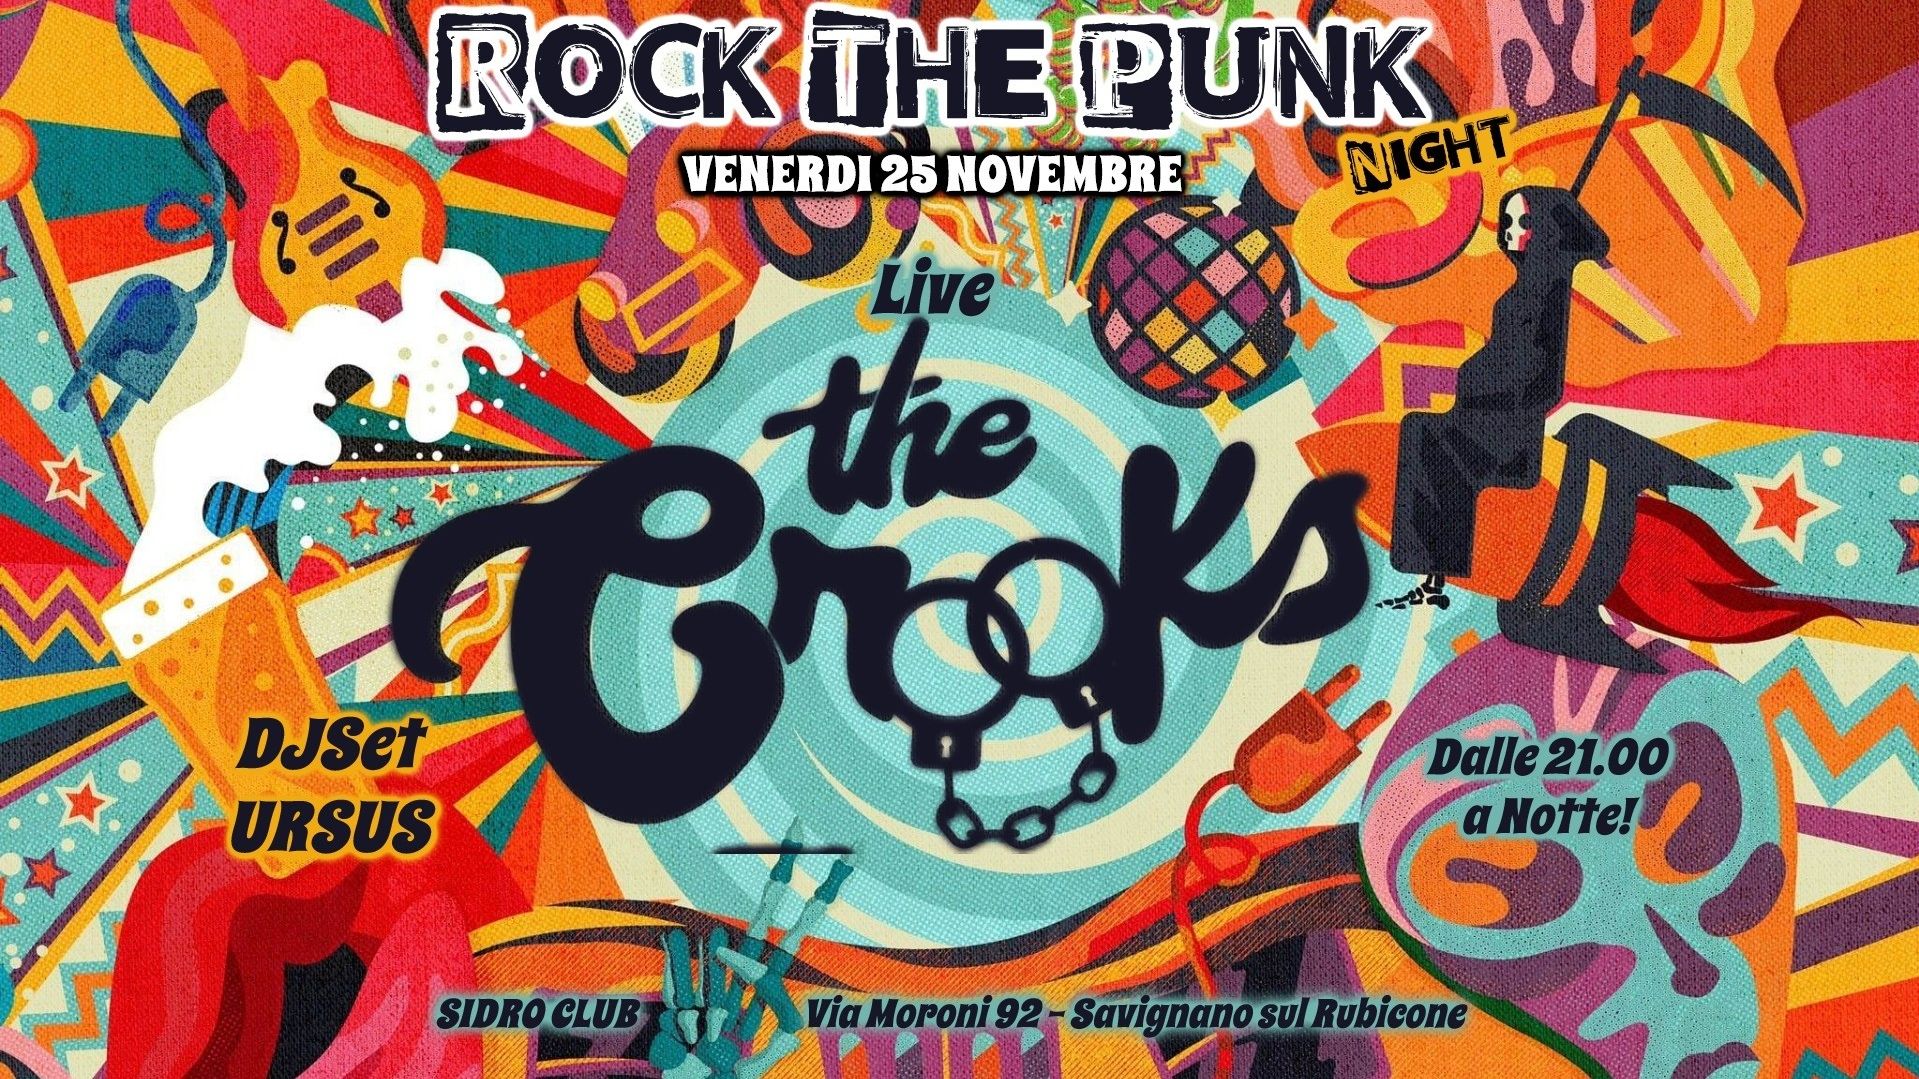 Rock The Punk Night - The Crooks & Djset Ursus